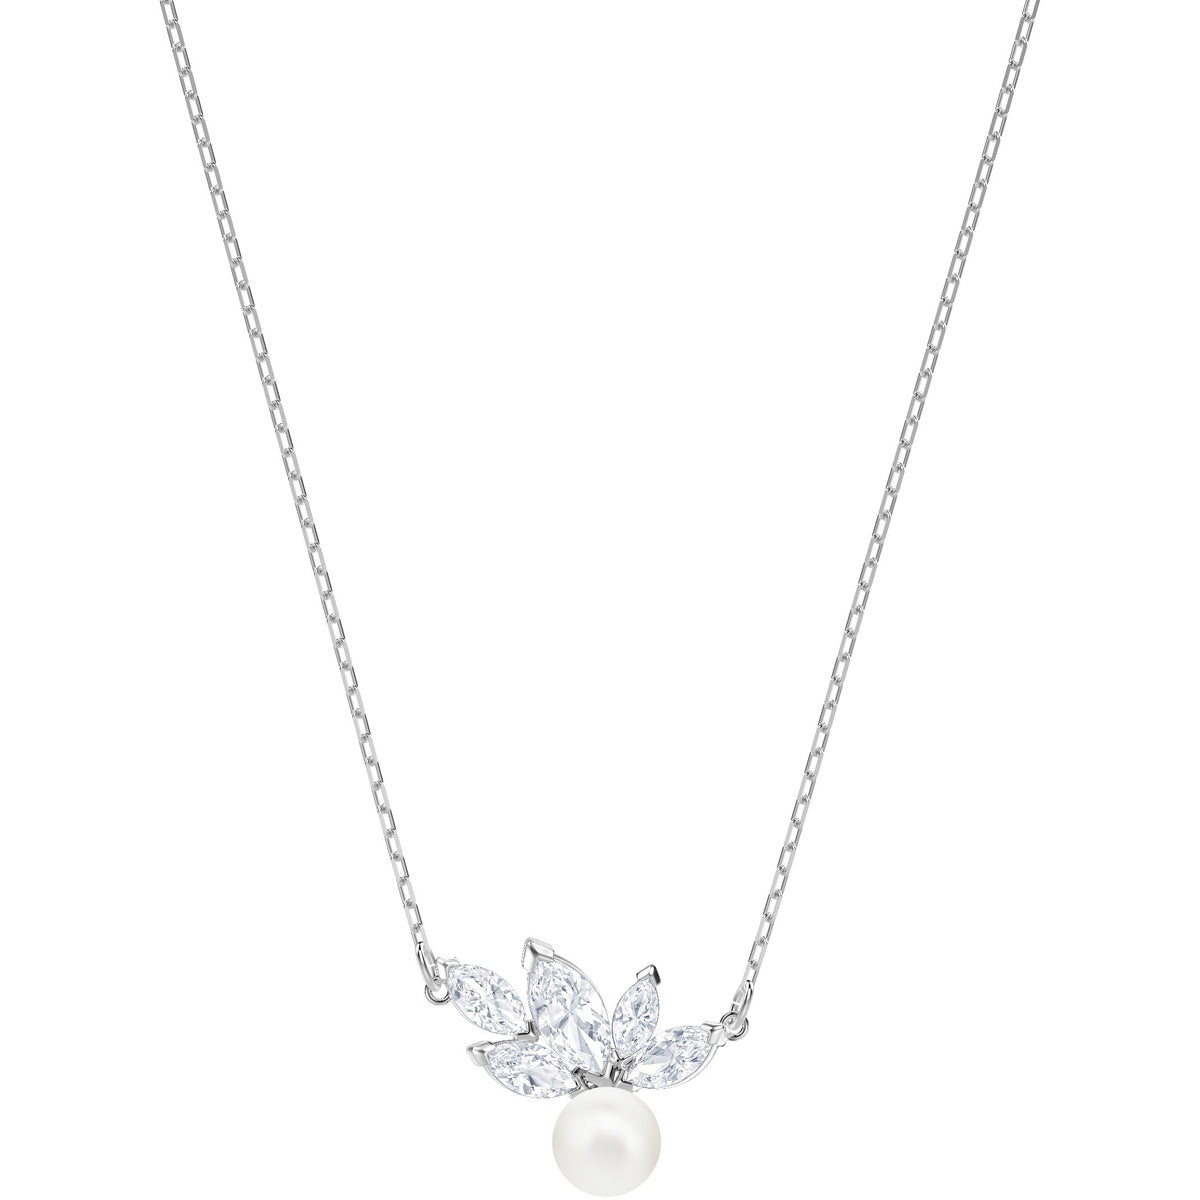 Swarovski Crystal Jewelry LOUISON STUD PIERCED EARRINGS, White, Rhodium  -5446025